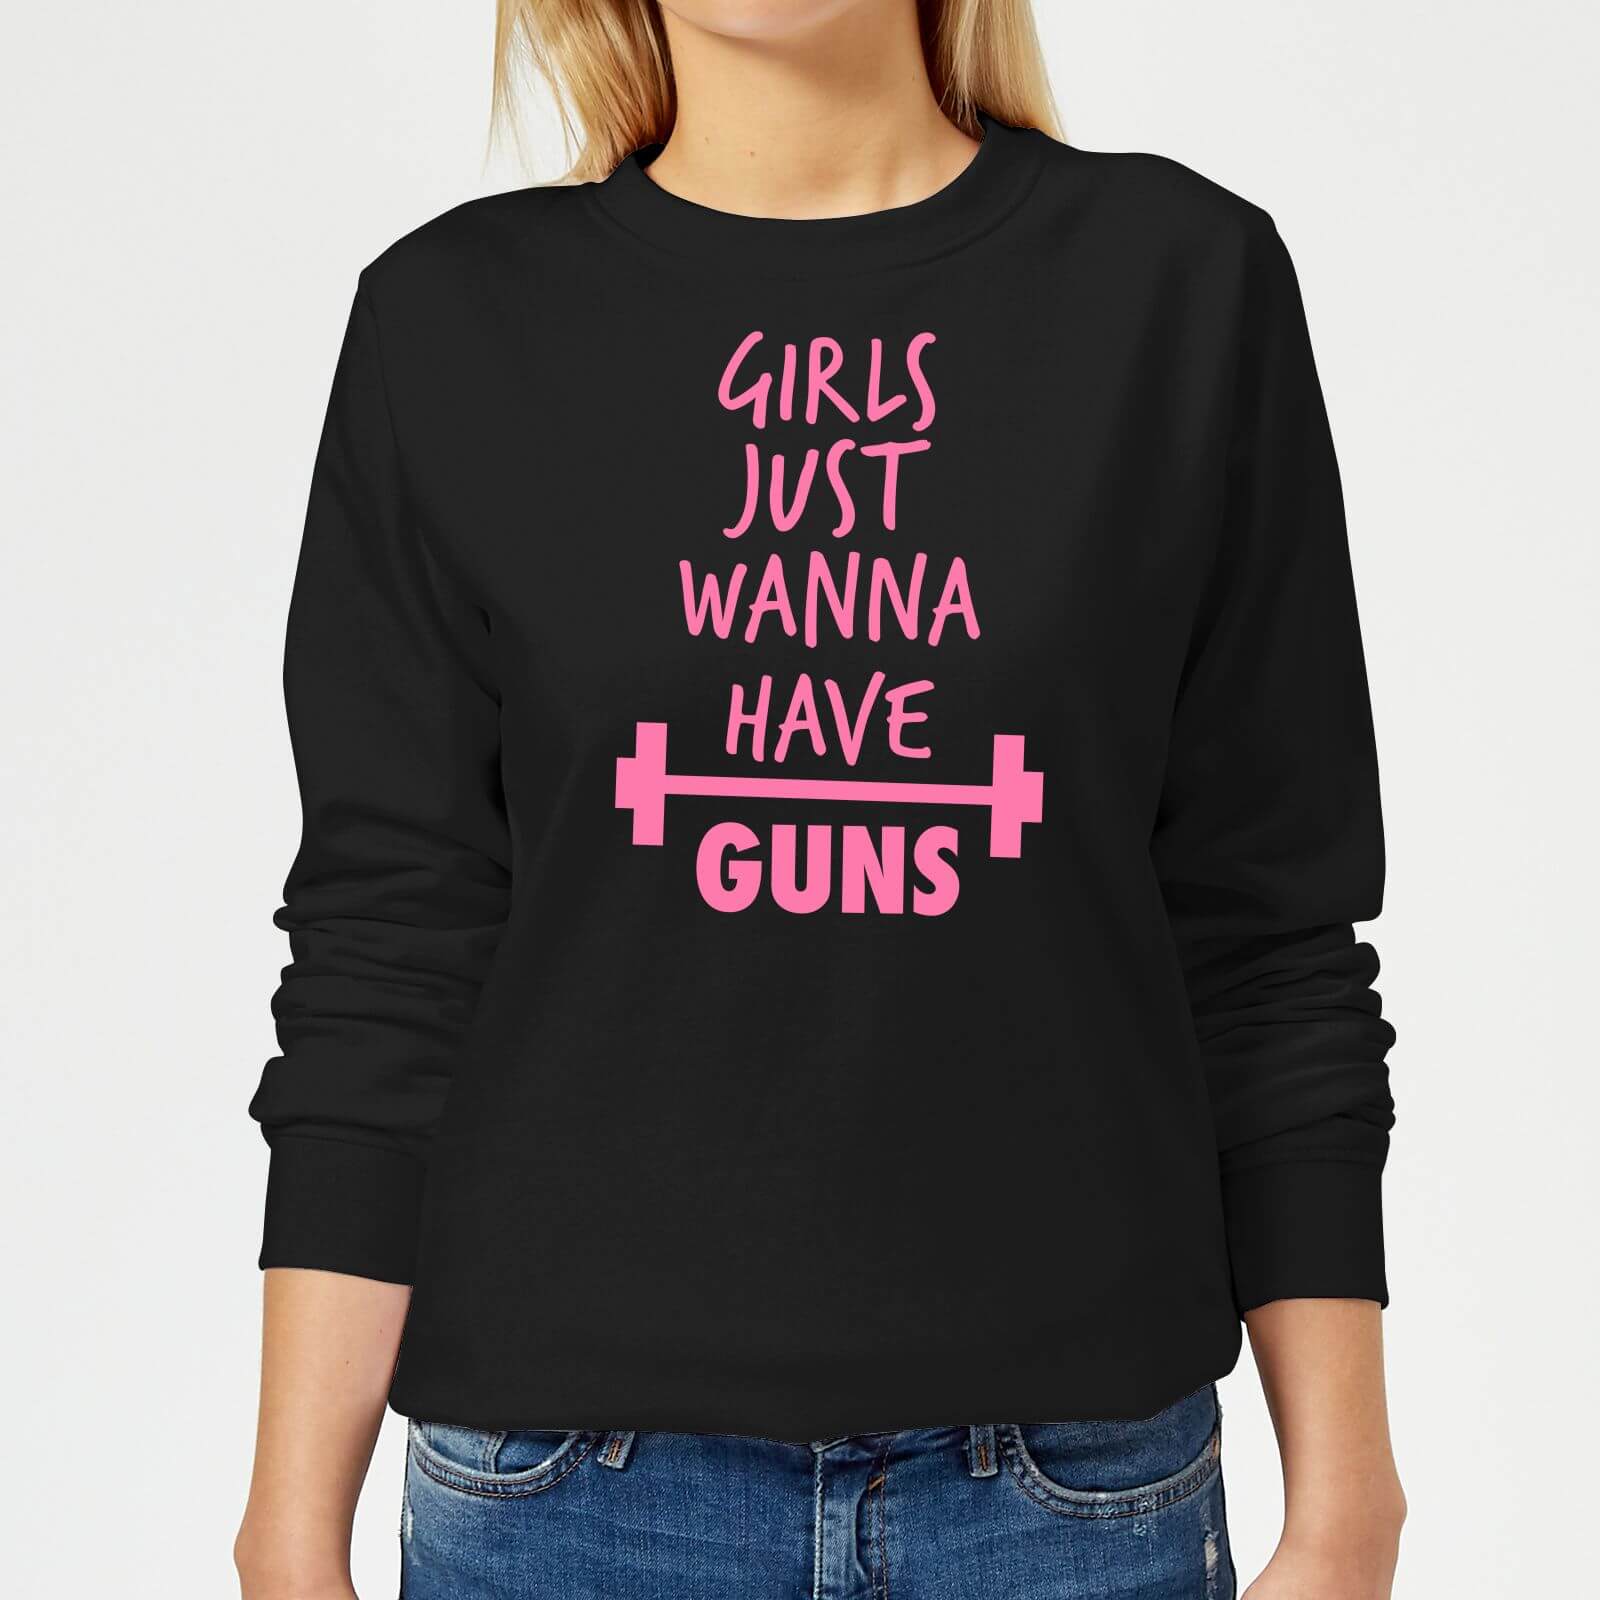 Girls Just Wanna have Guns Women's Sweatshirt - Black - XXL - Black